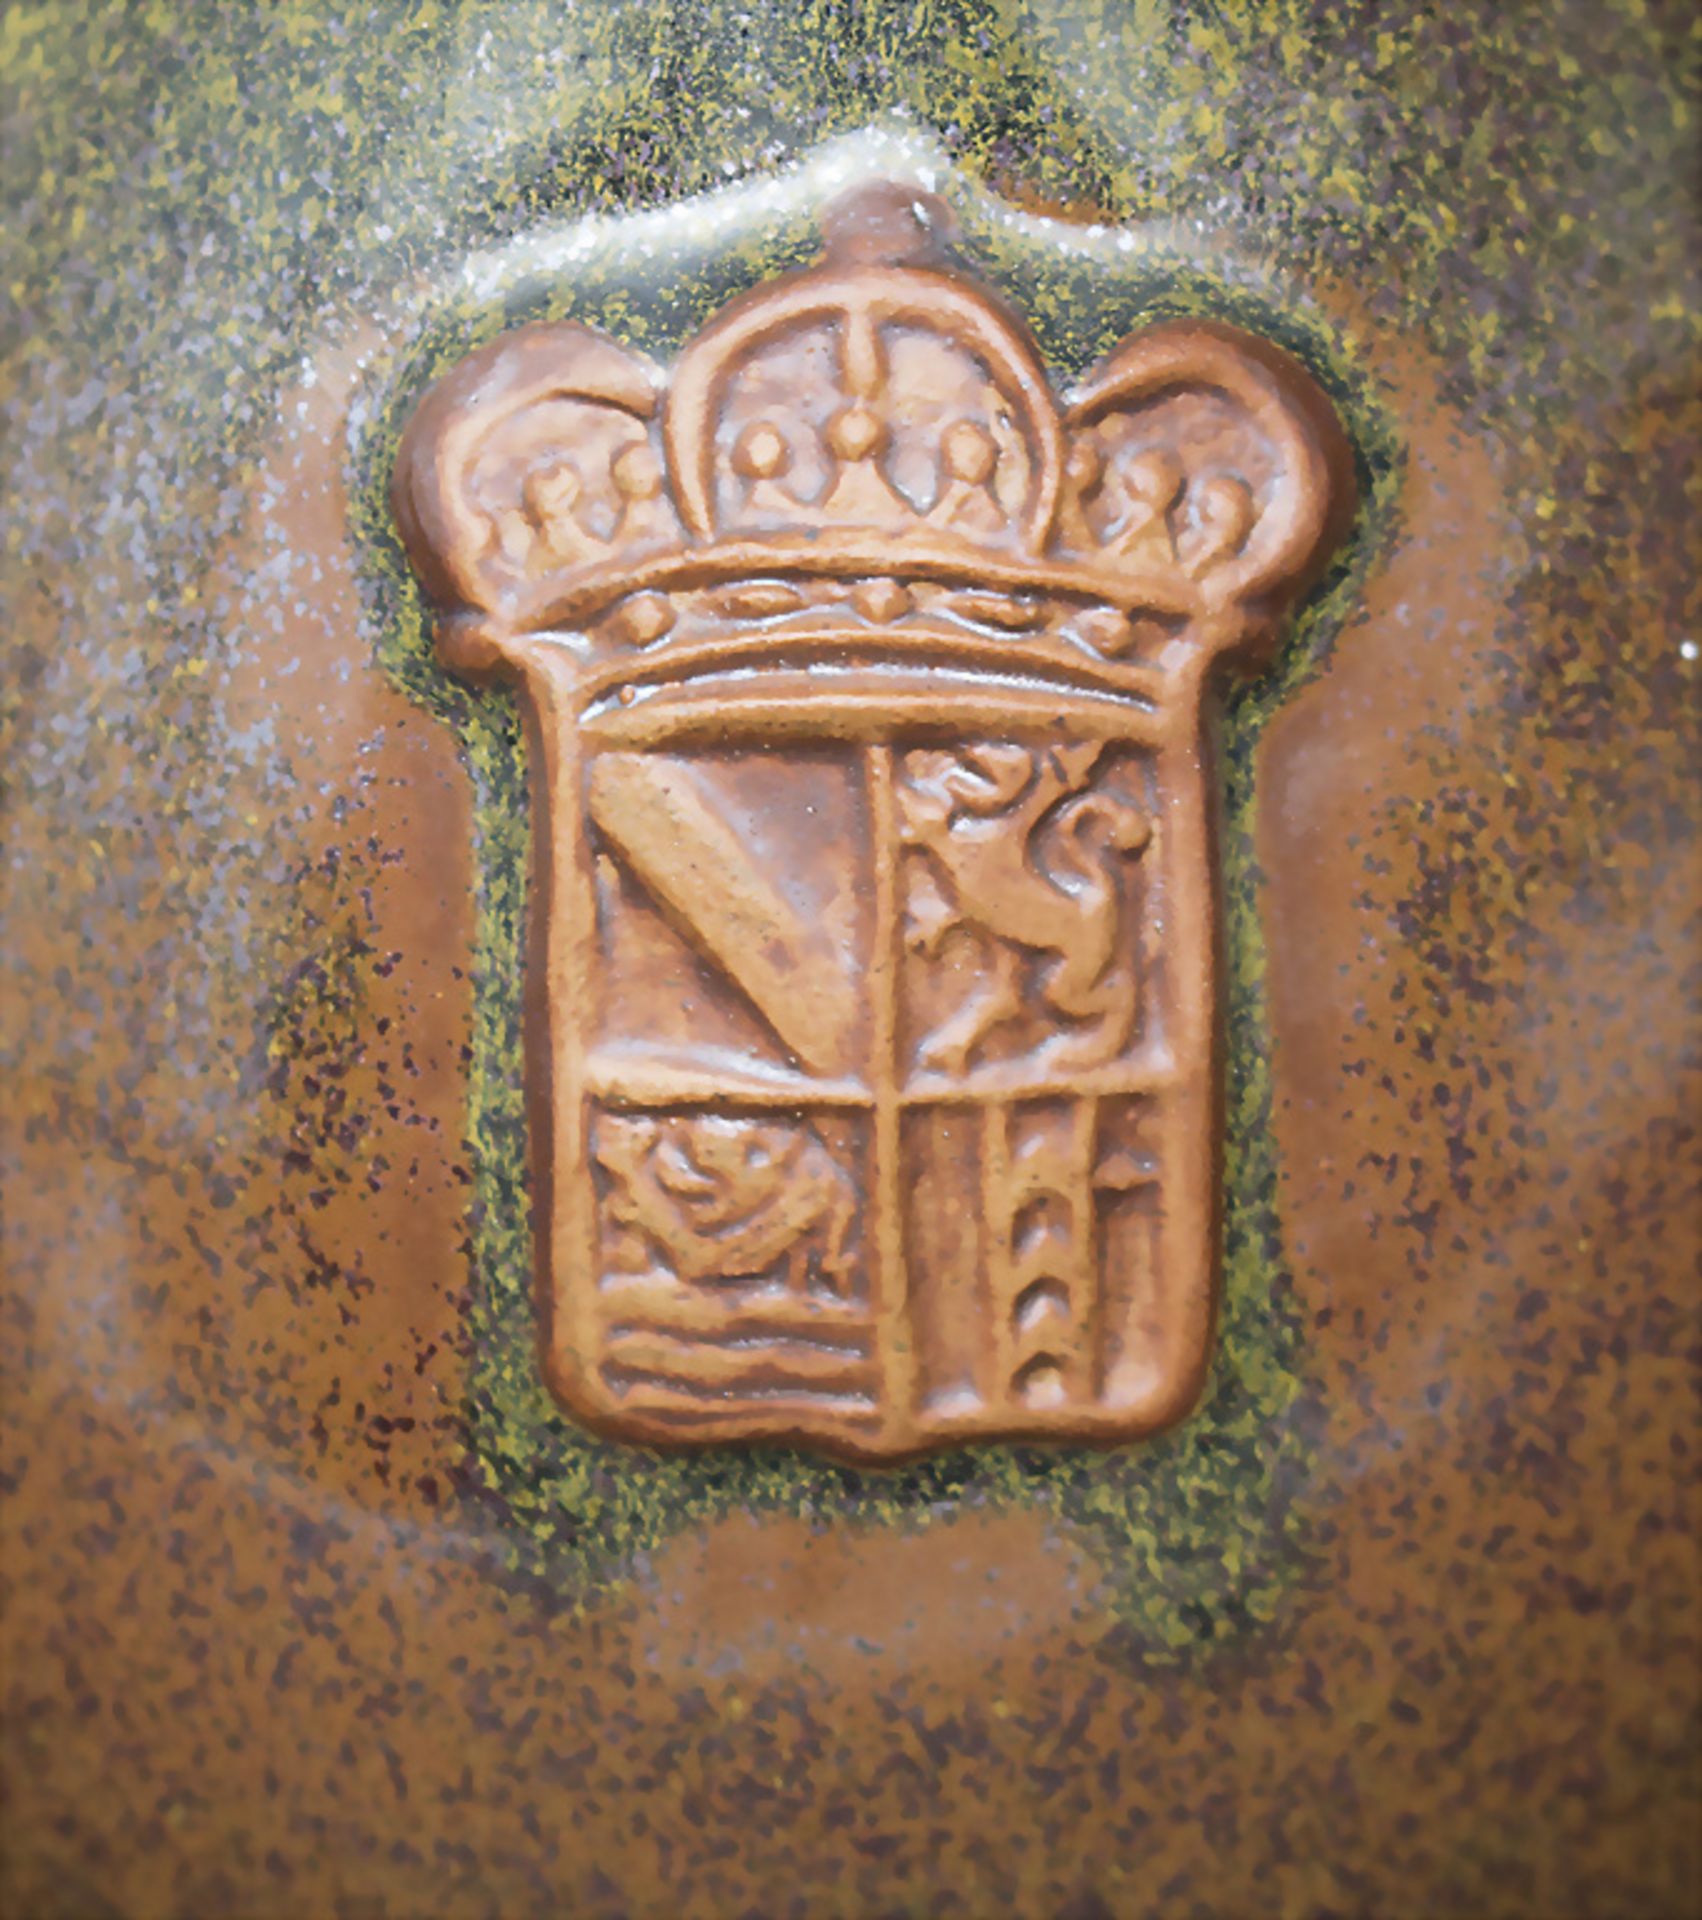 Keramik-Krug mit Wappendekor / A ceramic jug with coat of arms, Horst Kerstan, Kandern - Image 2 of 4